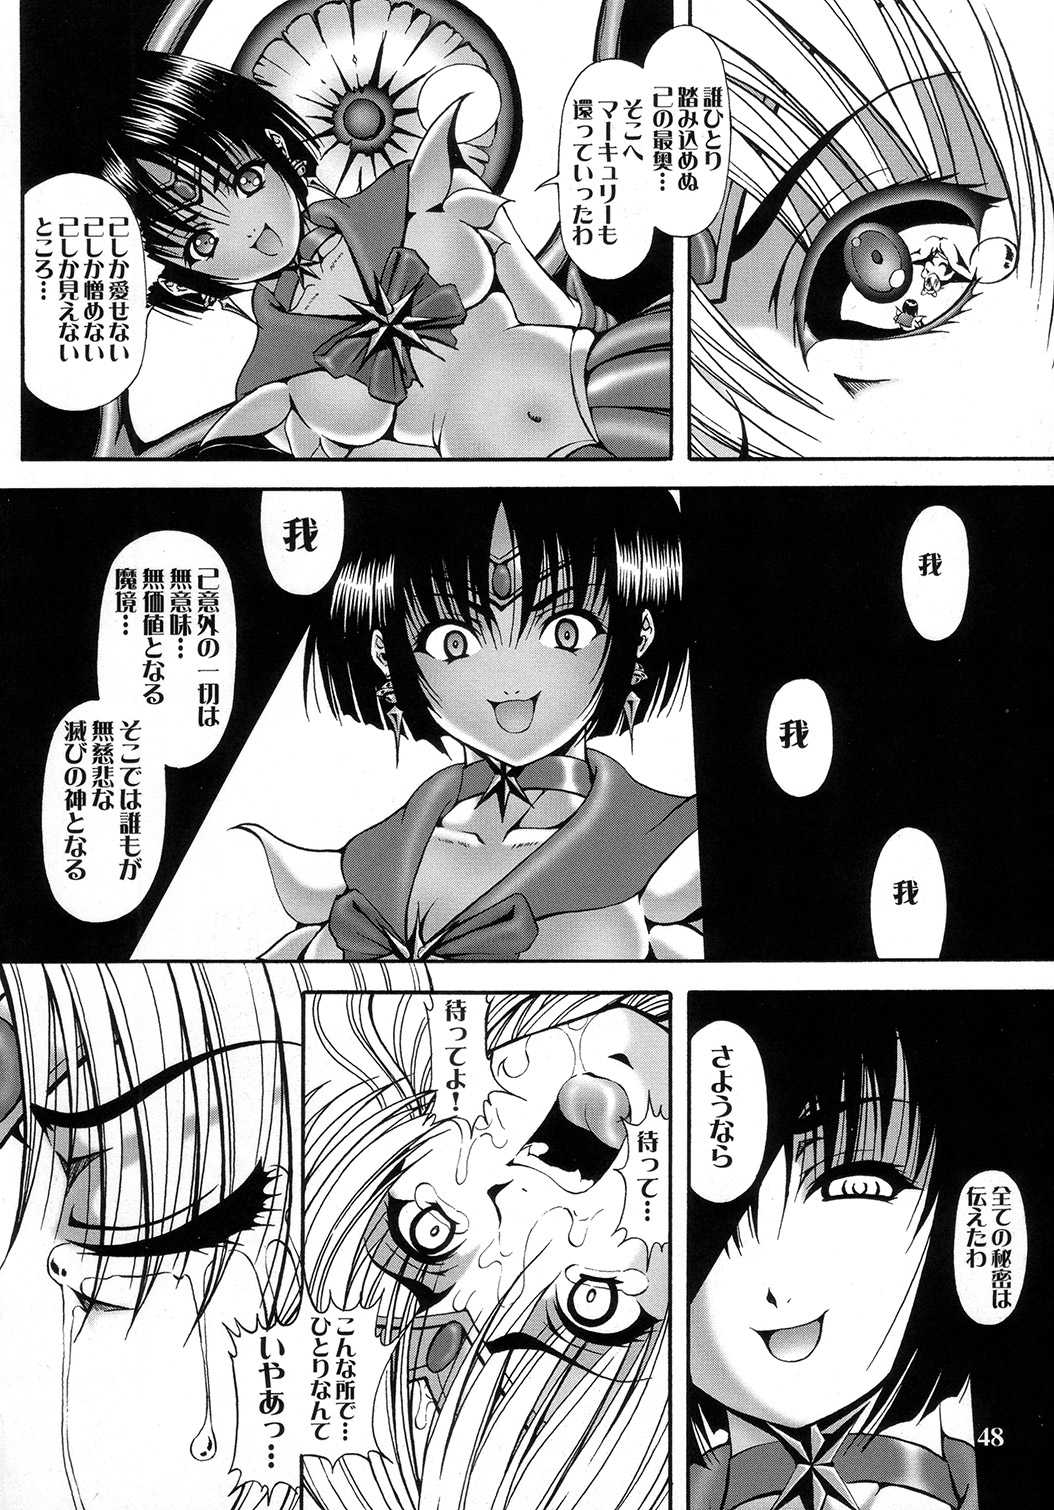 [kikka sakerou] Black Lotus-Saturnalia Phase 3.0 {Sailor Moon} {masterbloodfer} 